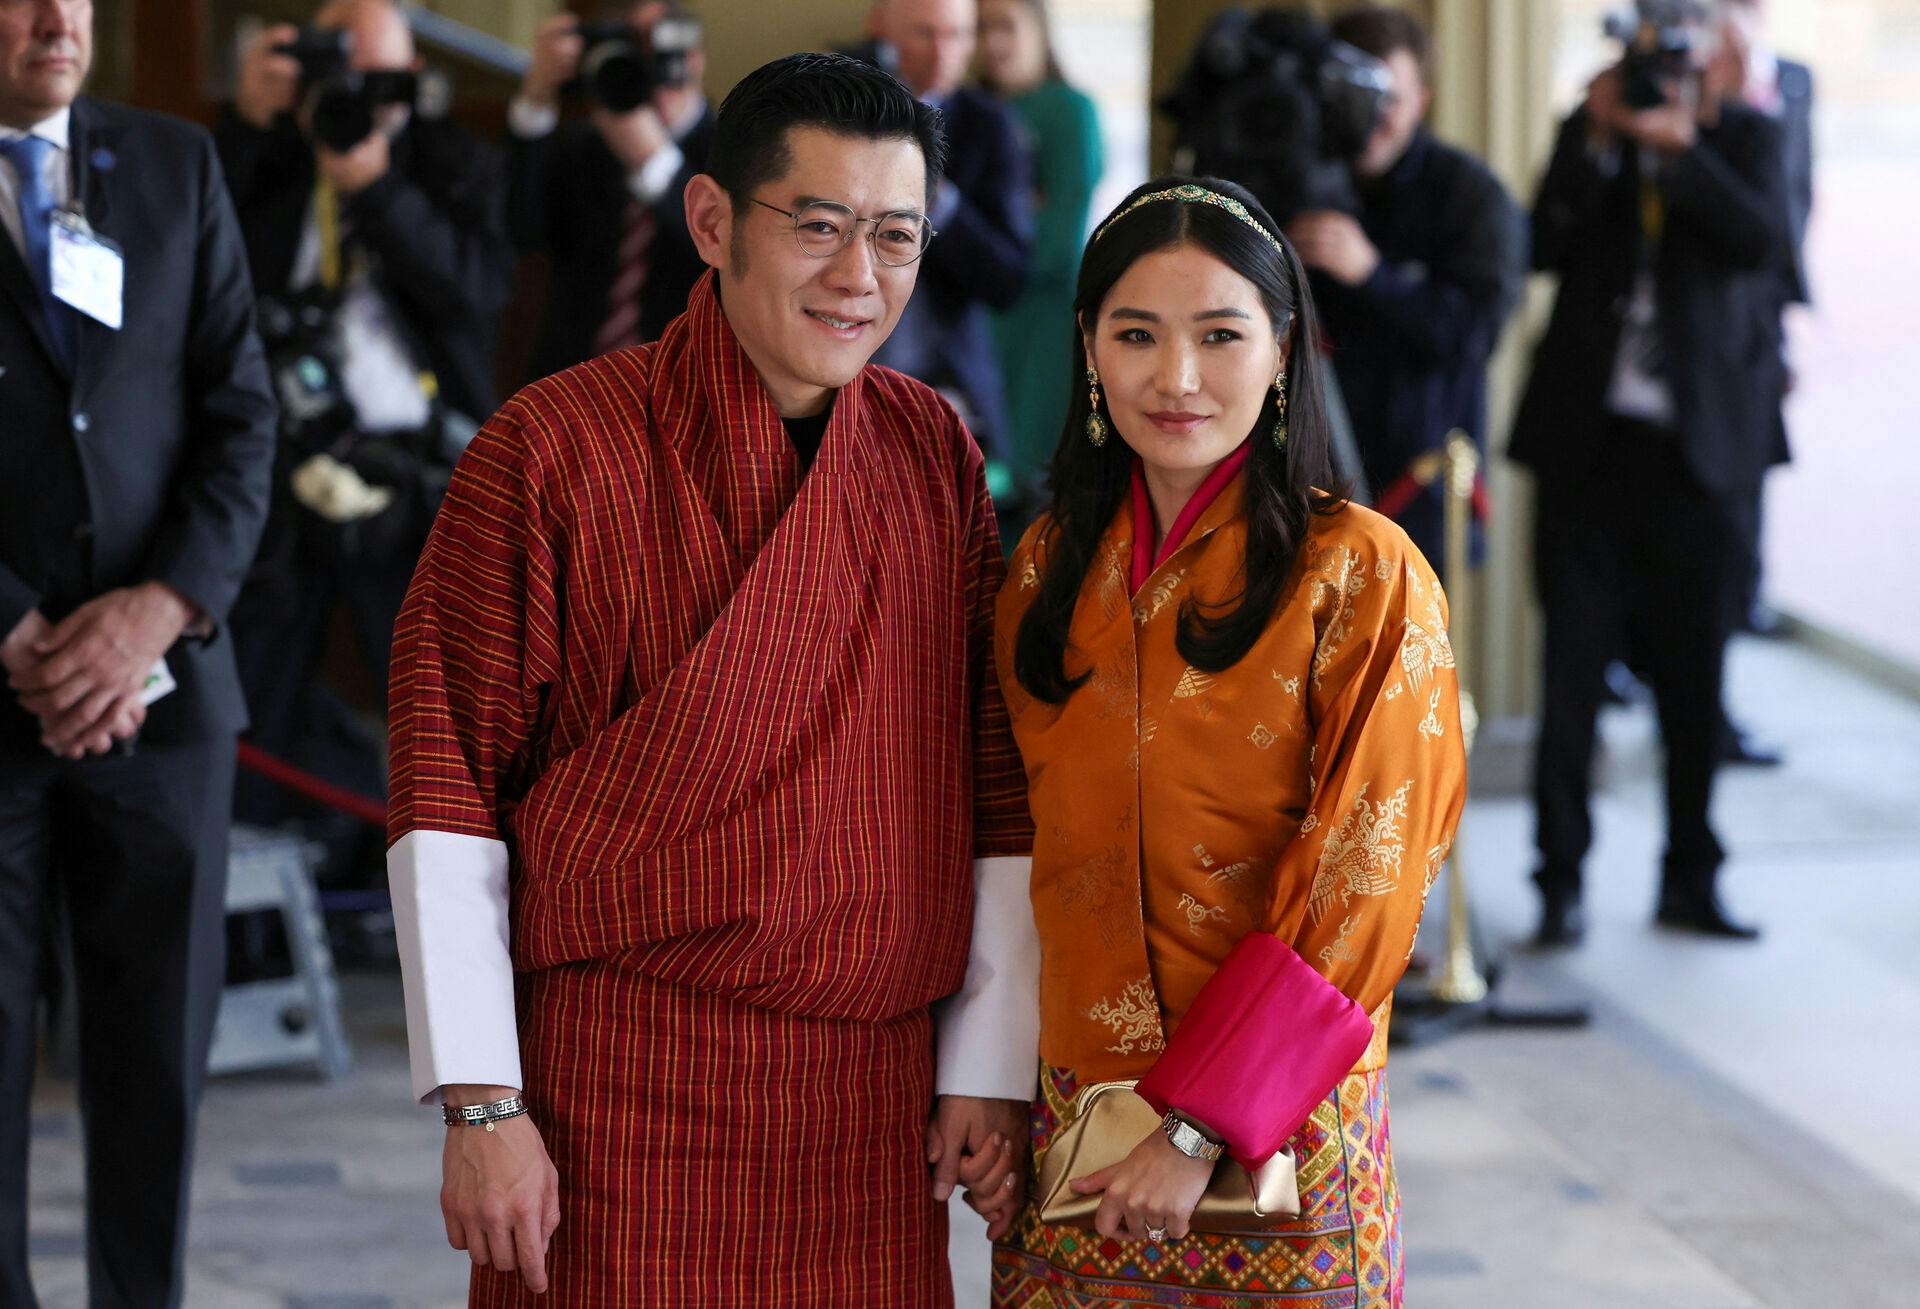 Bhutans konge, Jigme Khesar Namgyel Wangchuck, og dronning, Jetsun Pema, skal være forældre for tredje gang.